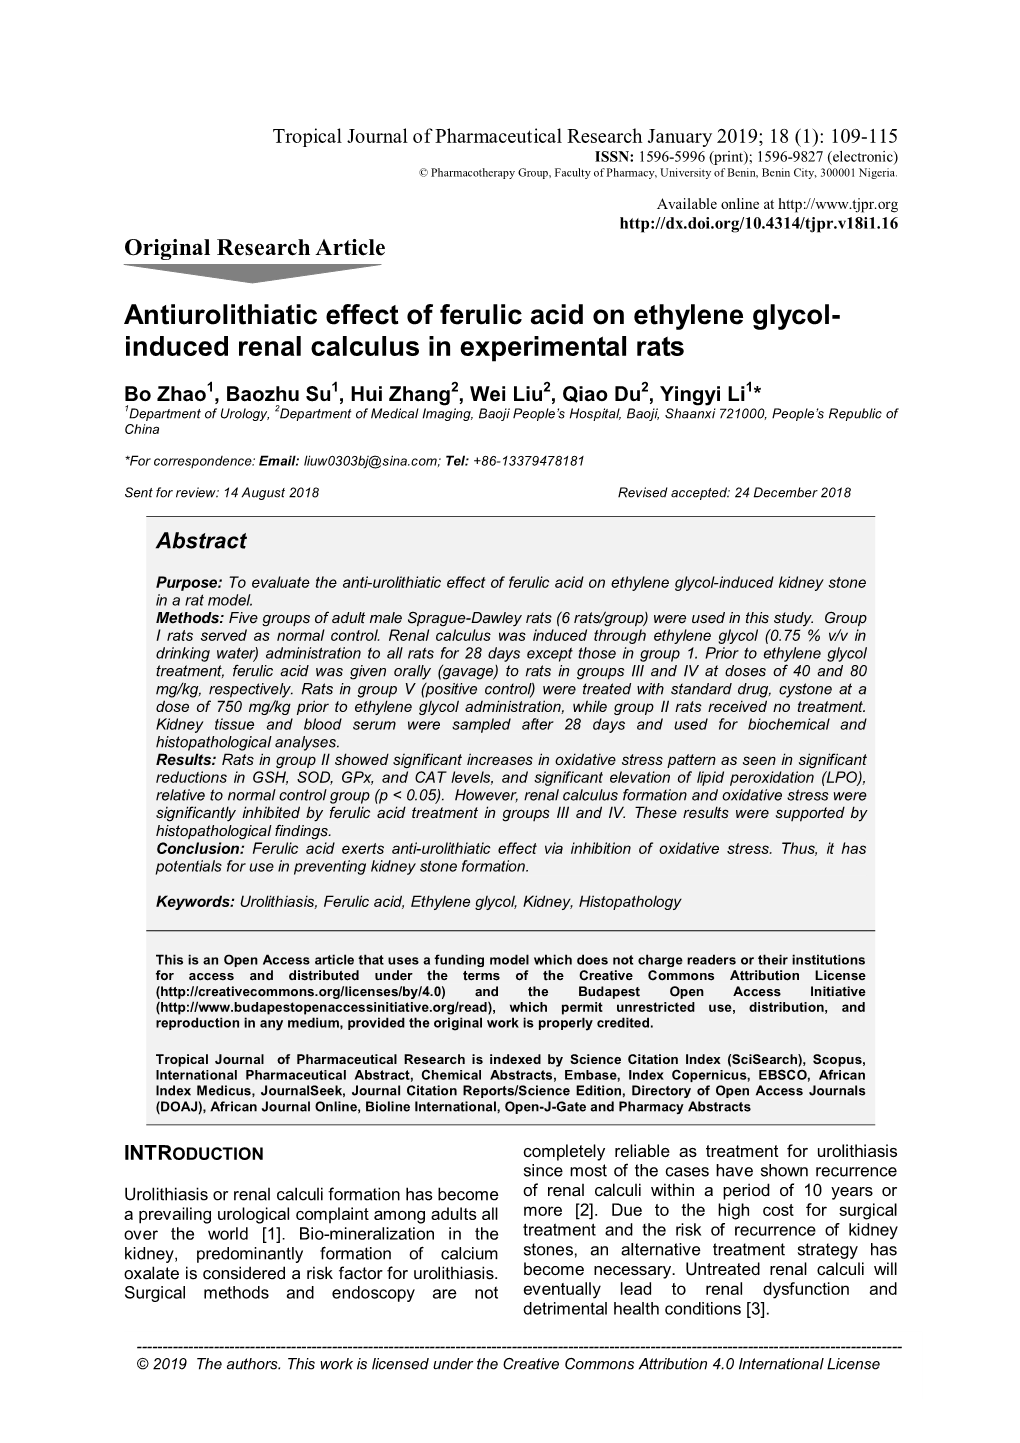 Antiurolithiatic Effect of Ferulic Acid on Ethylene Glycol- Induced Renal Calculus in Experimental Rats